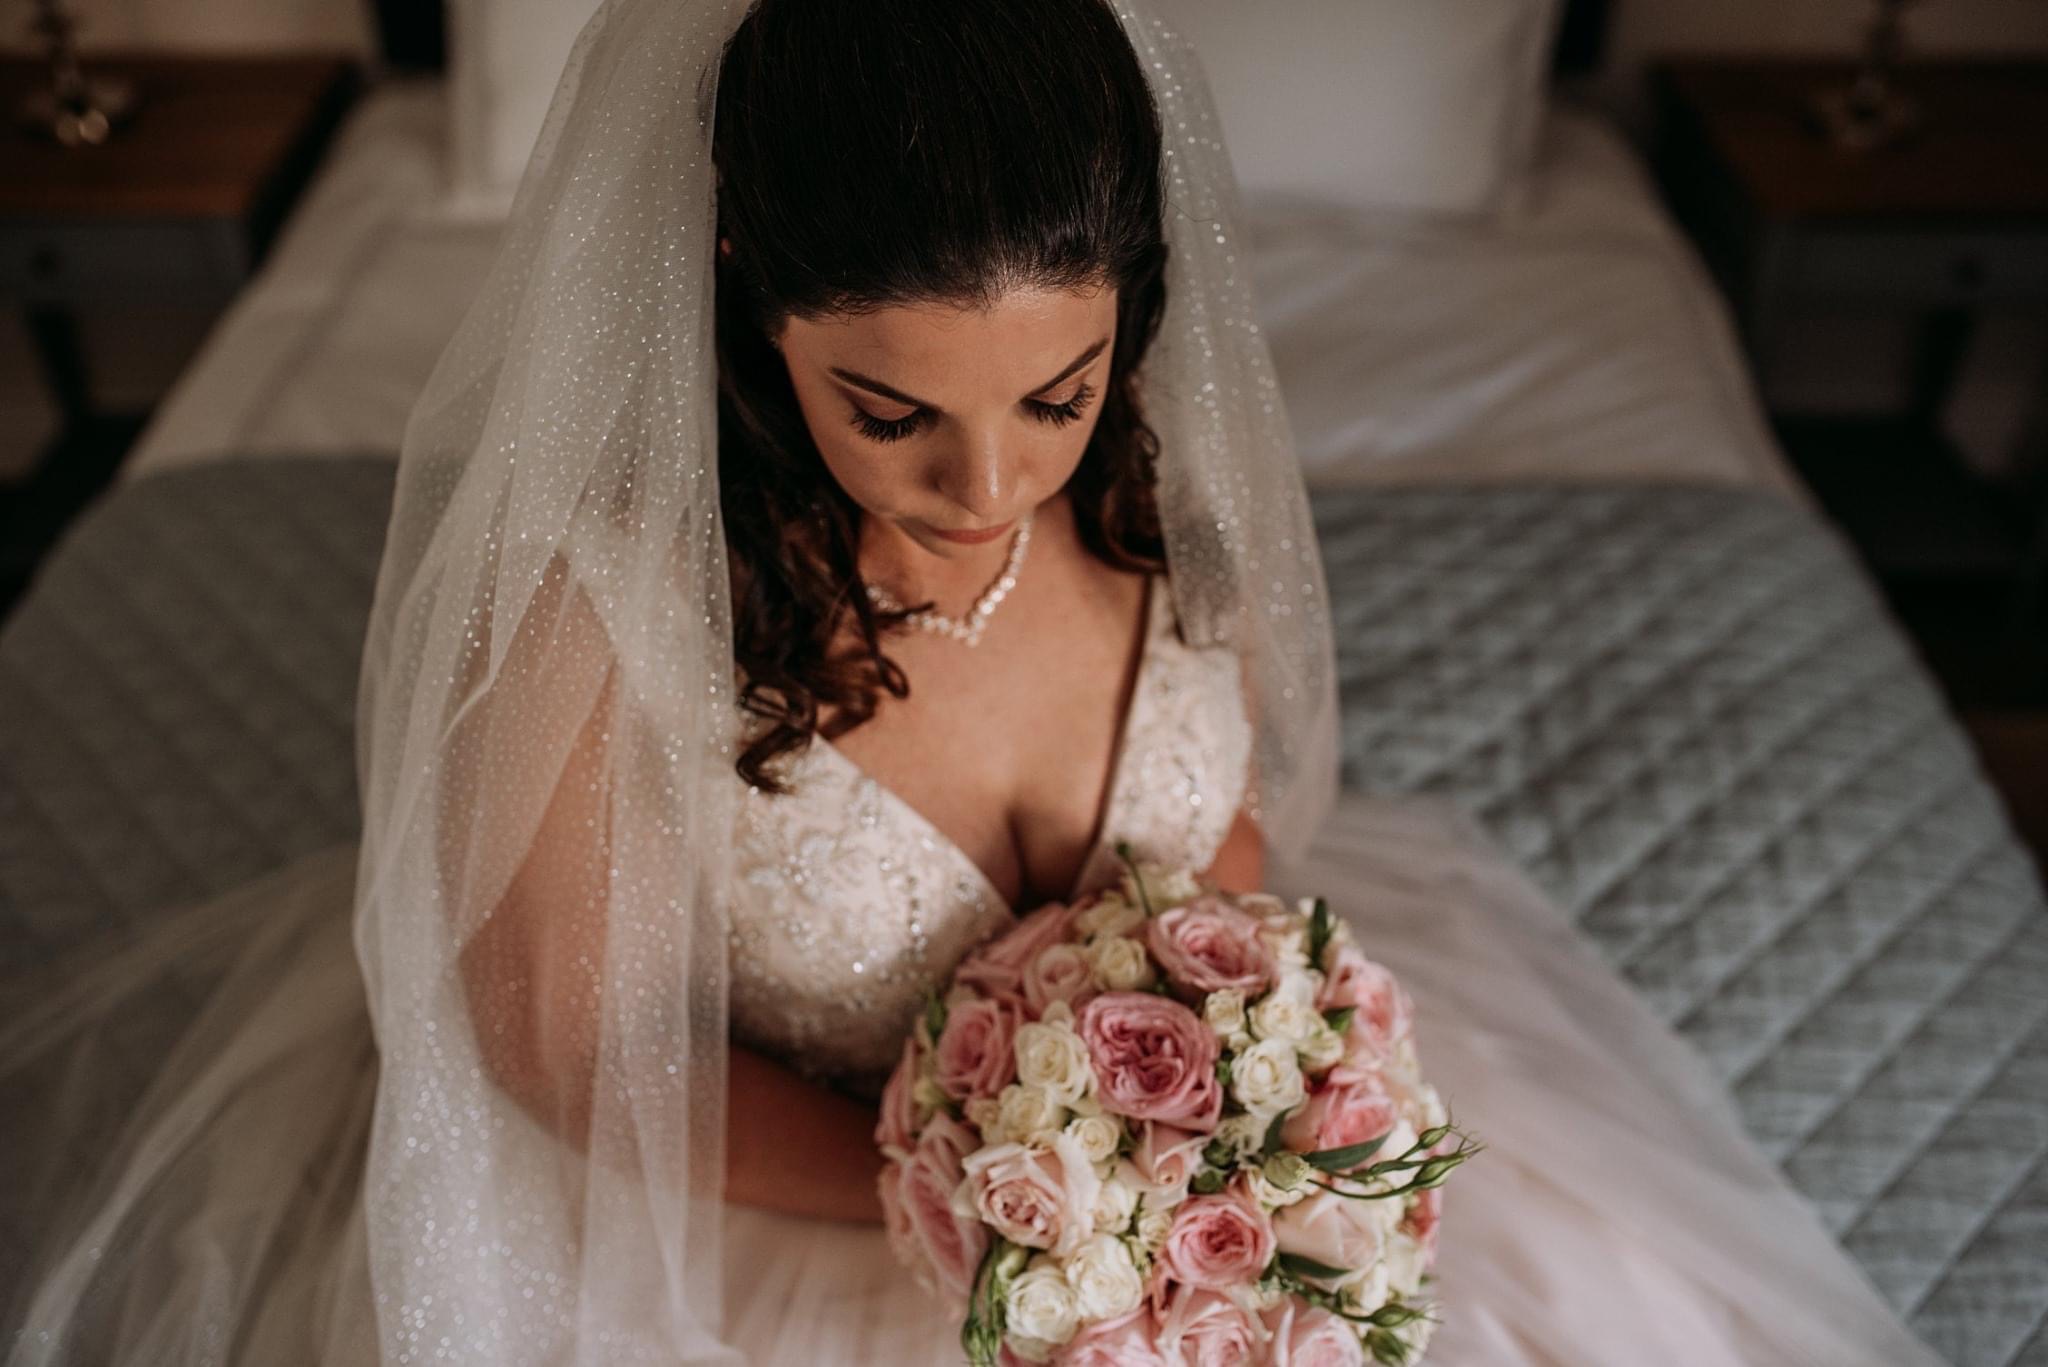 Bridal Bouquet - Tight Round Posy